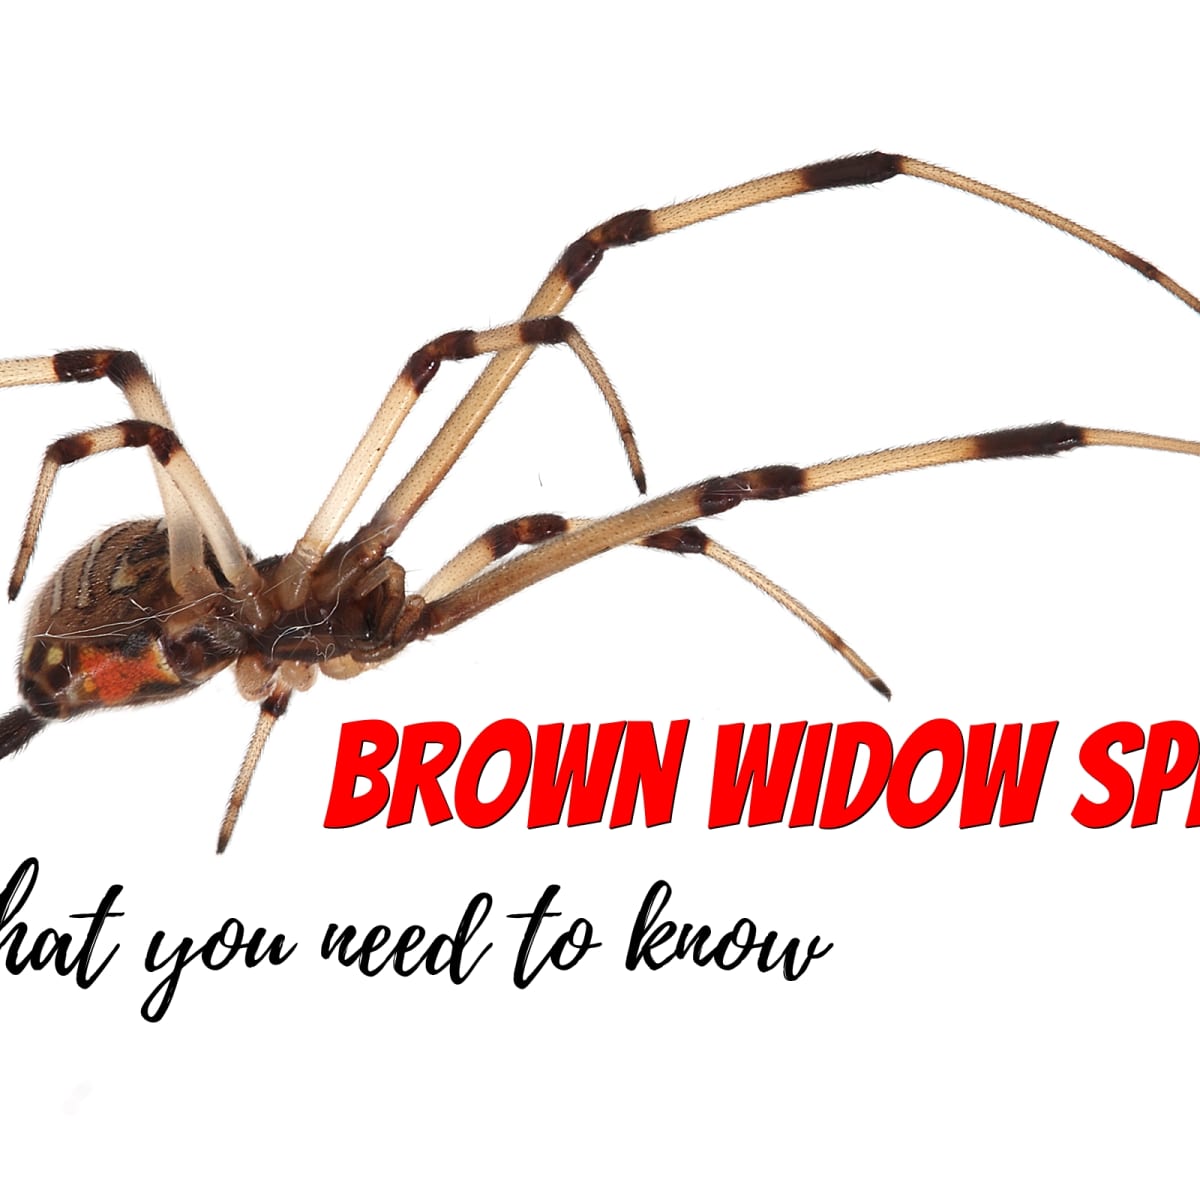 Black Widow vs. Brown Recluse